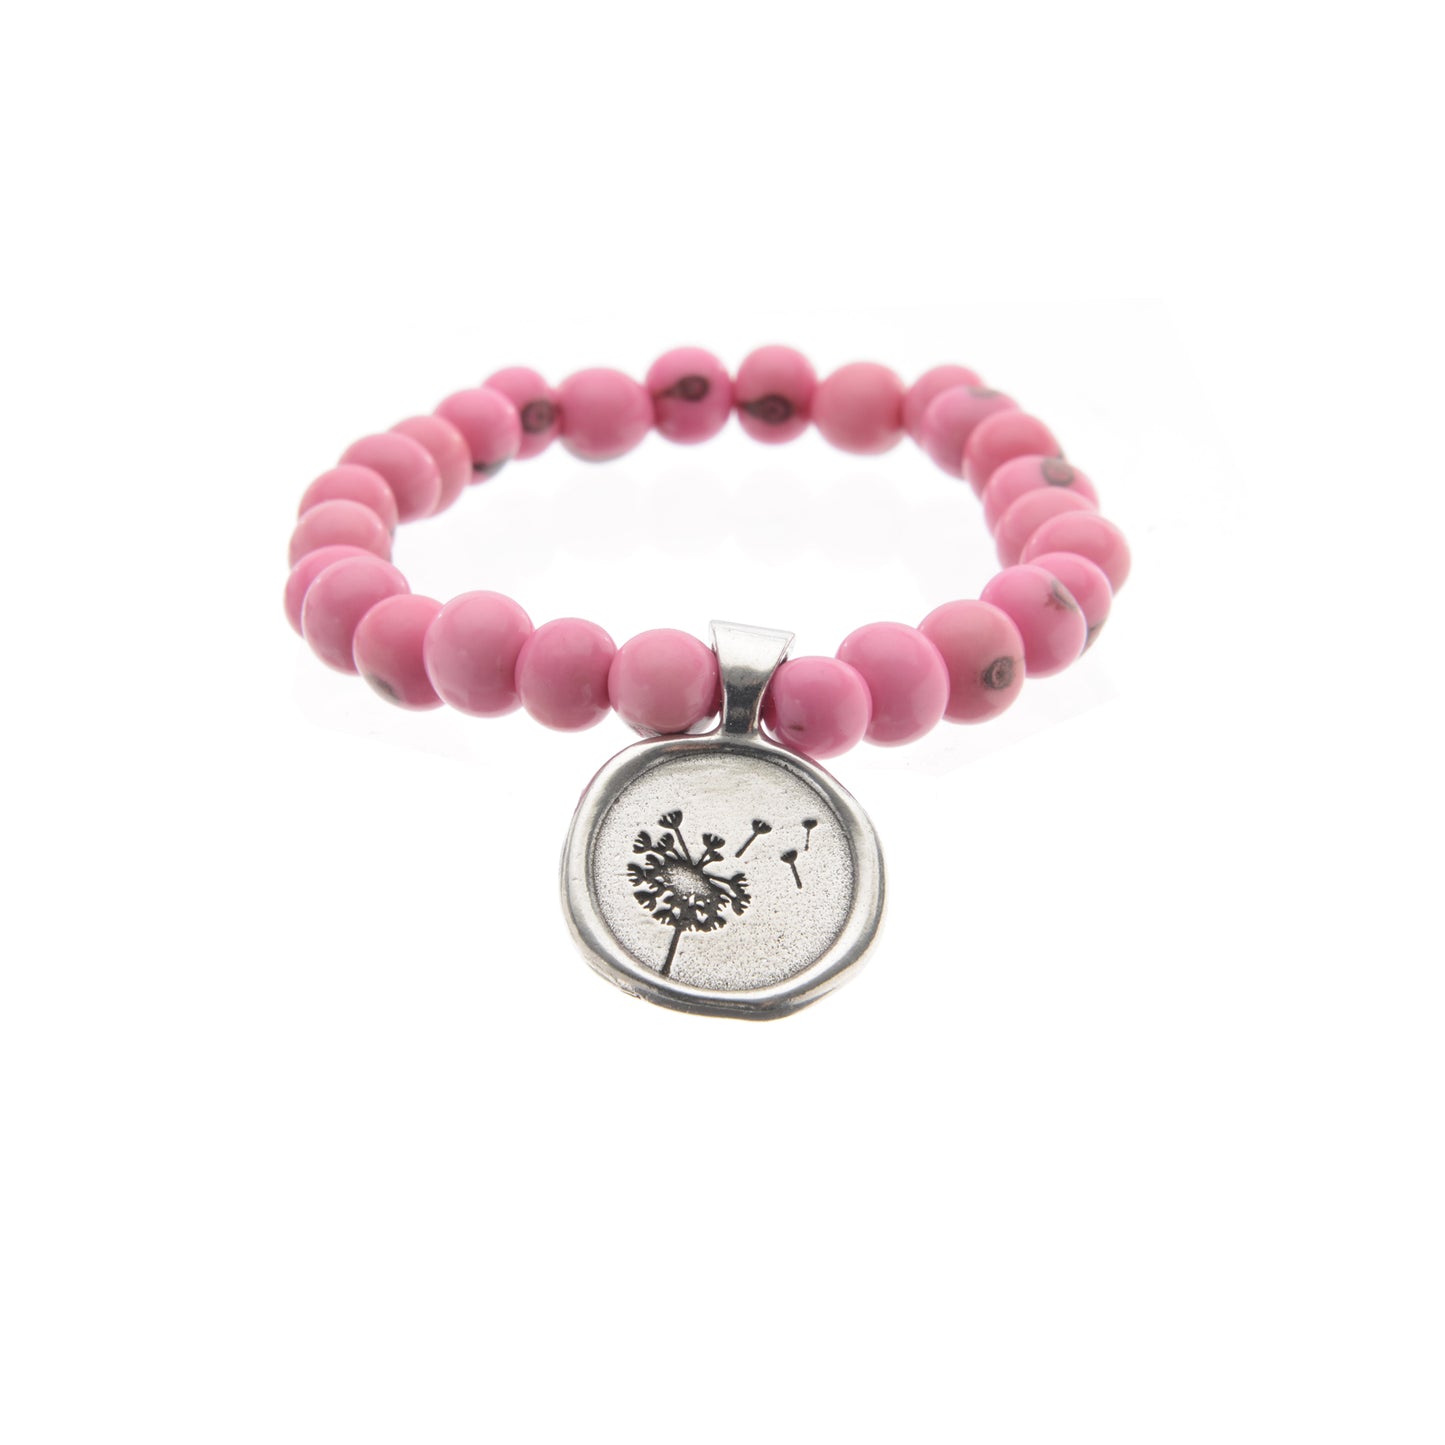 Acai Seeds Of Life Bracelet with Wax Seal - Hot Pink Beads